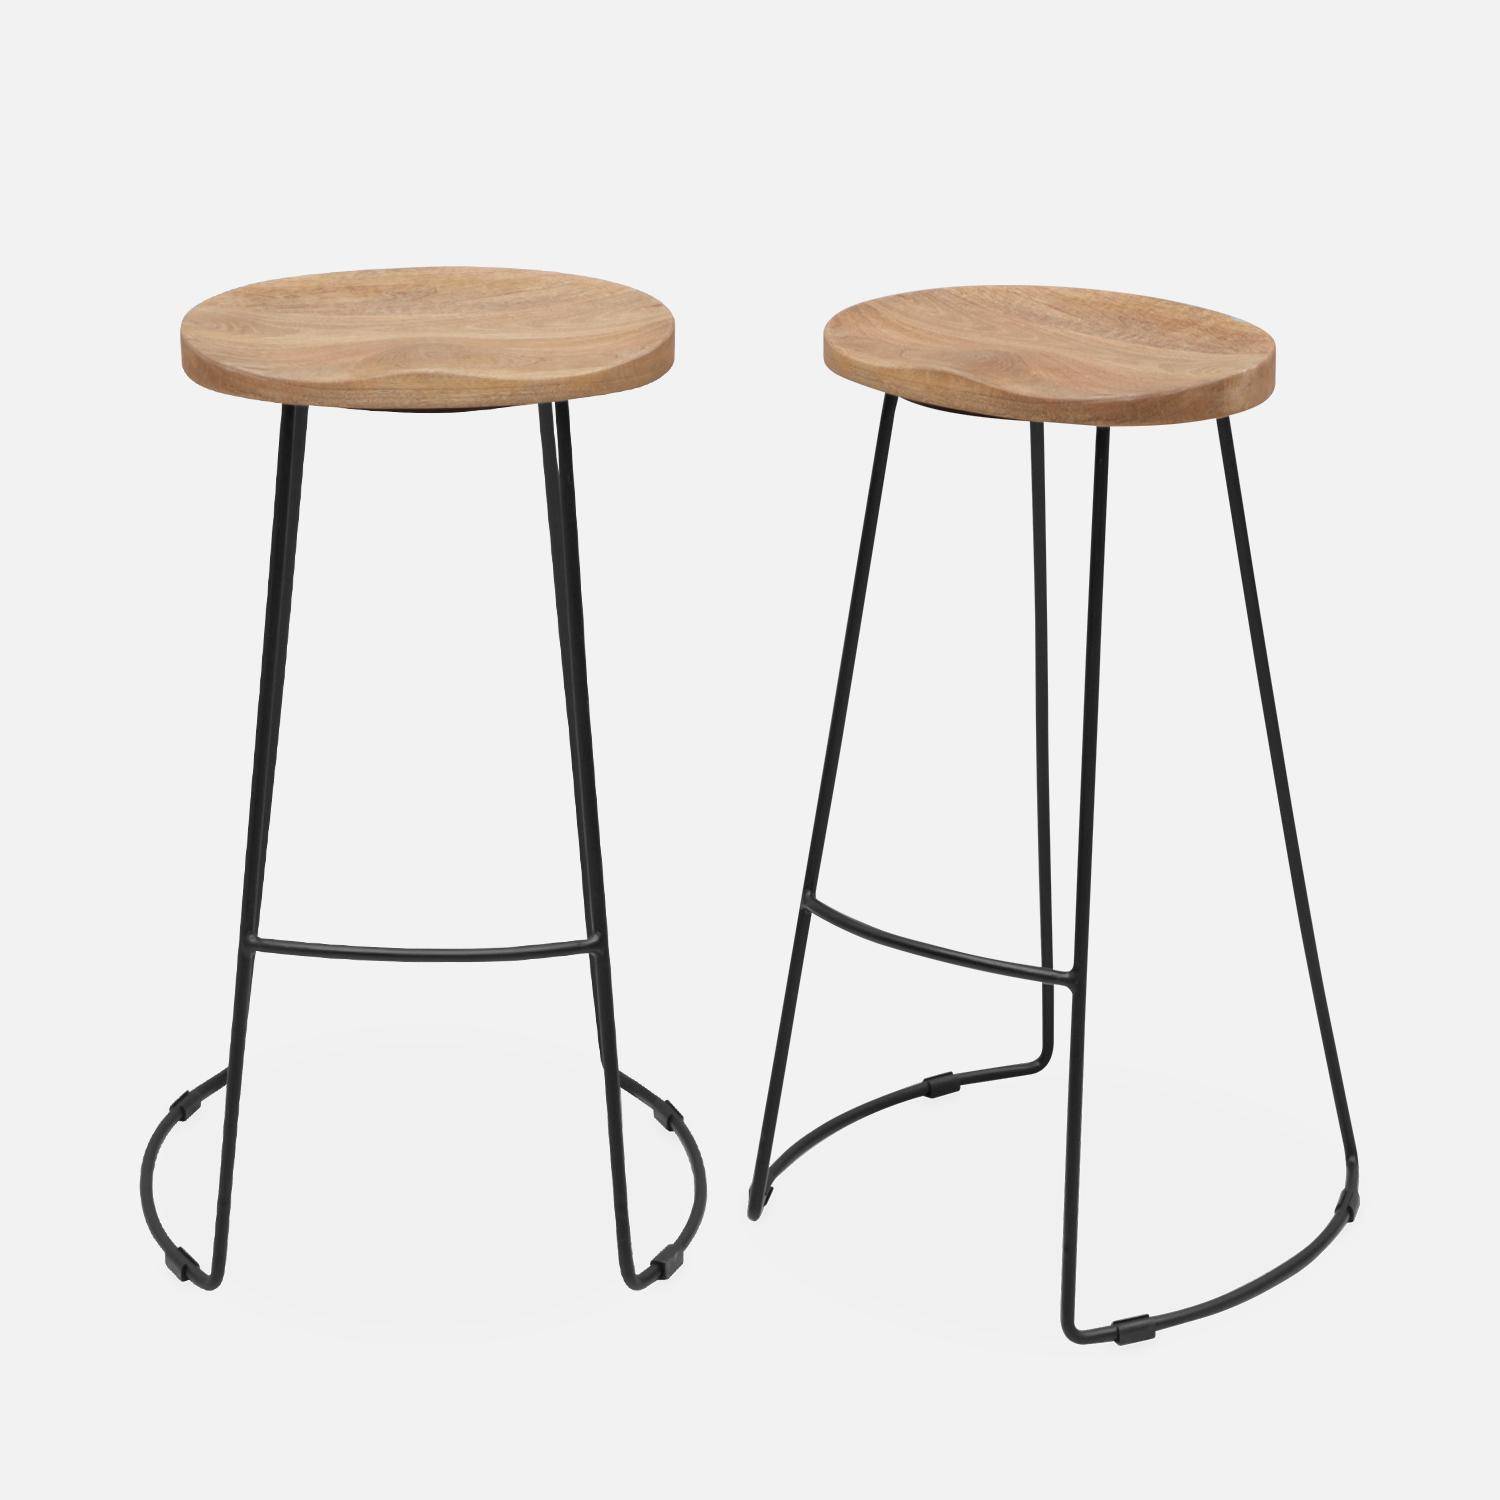 Pair of industrial metal and wooden bar stools, 47x40x75cm, Jaya, Natural, Mango wood seat, black metal legs,sweeek,Photo3